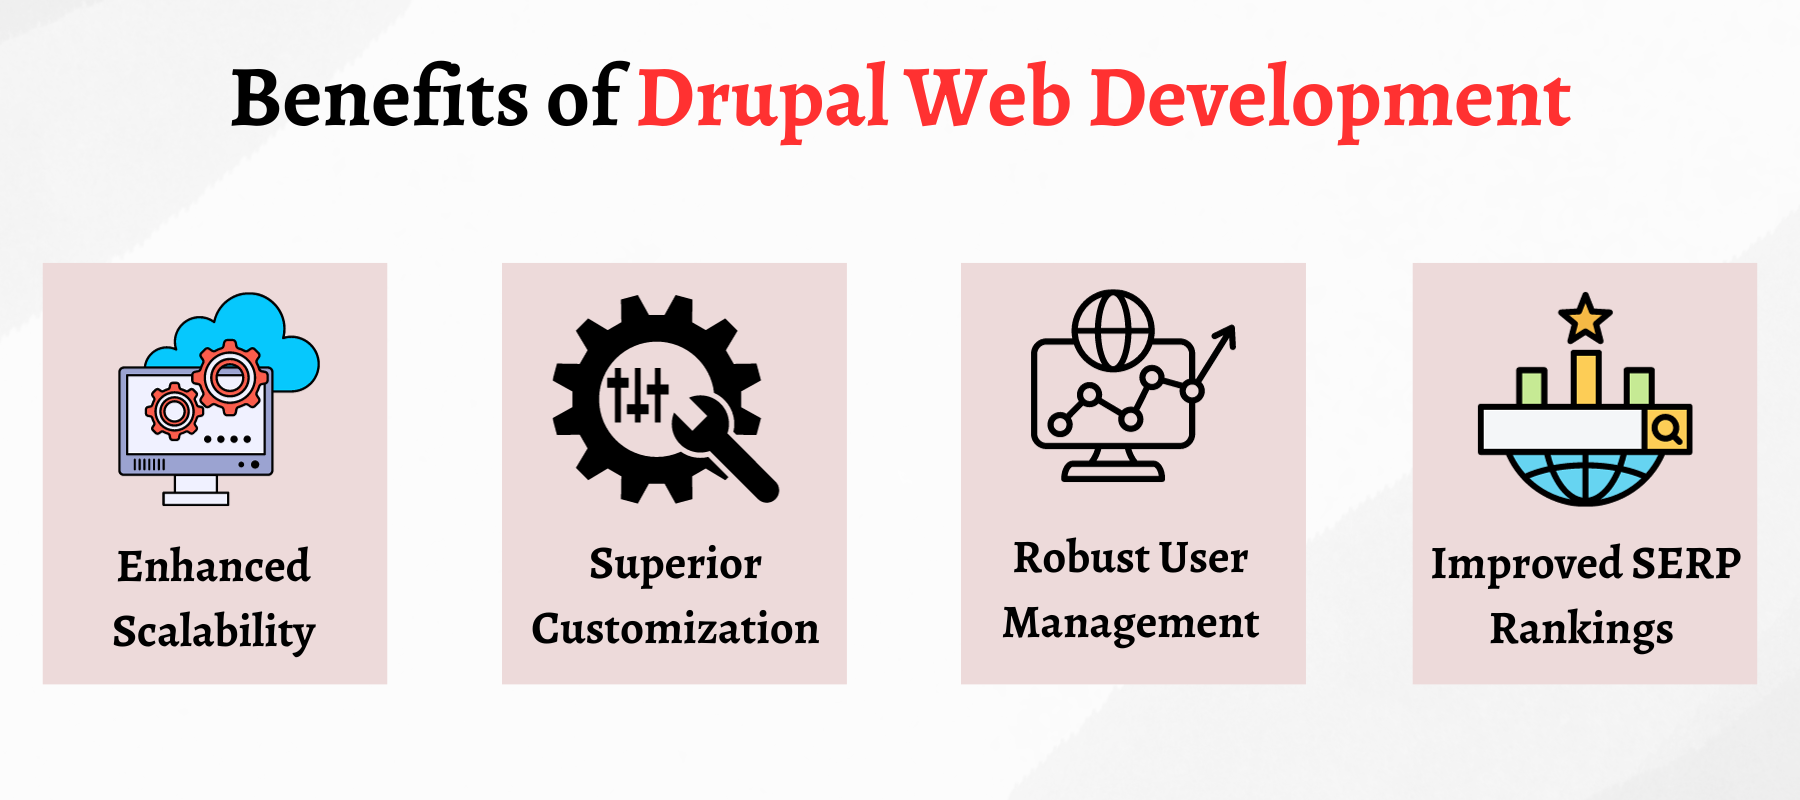 Benefits of Drupal Web Development